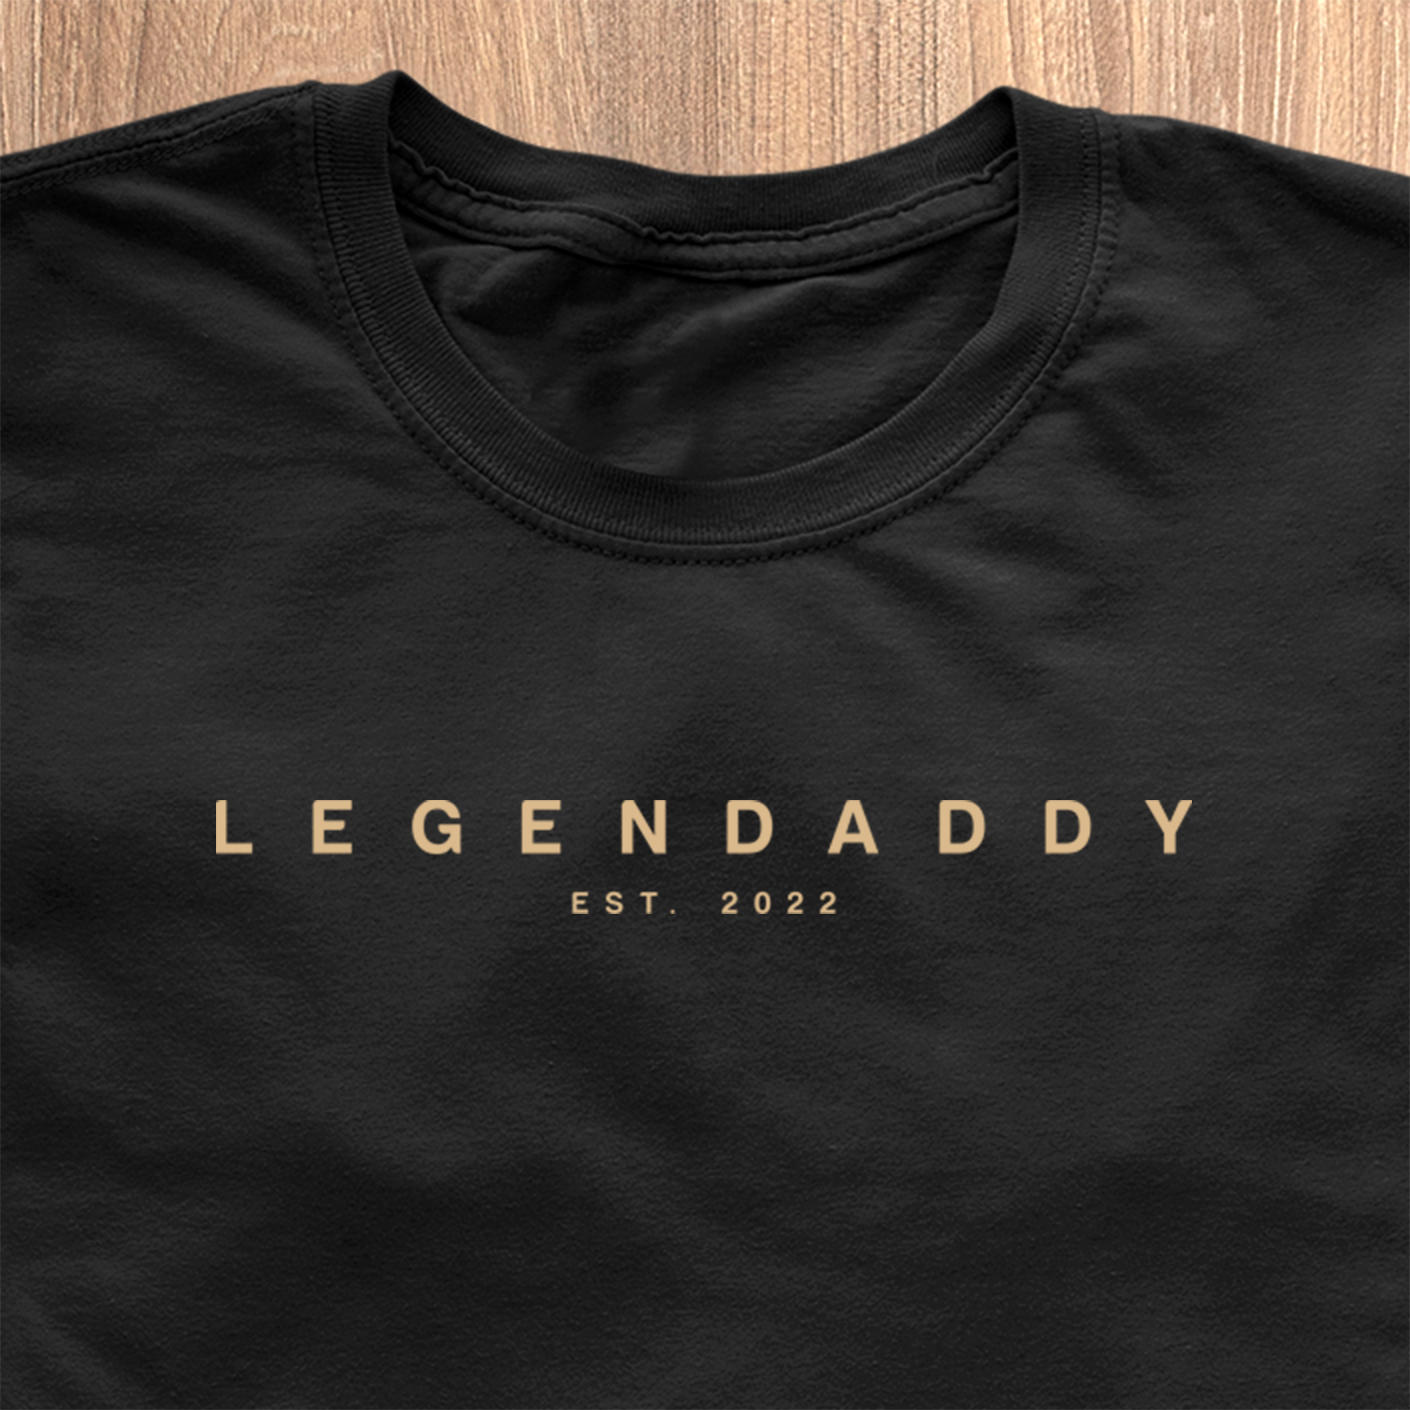 Legendaddy Modern Edition T-Shirt - Datum personalisierbar